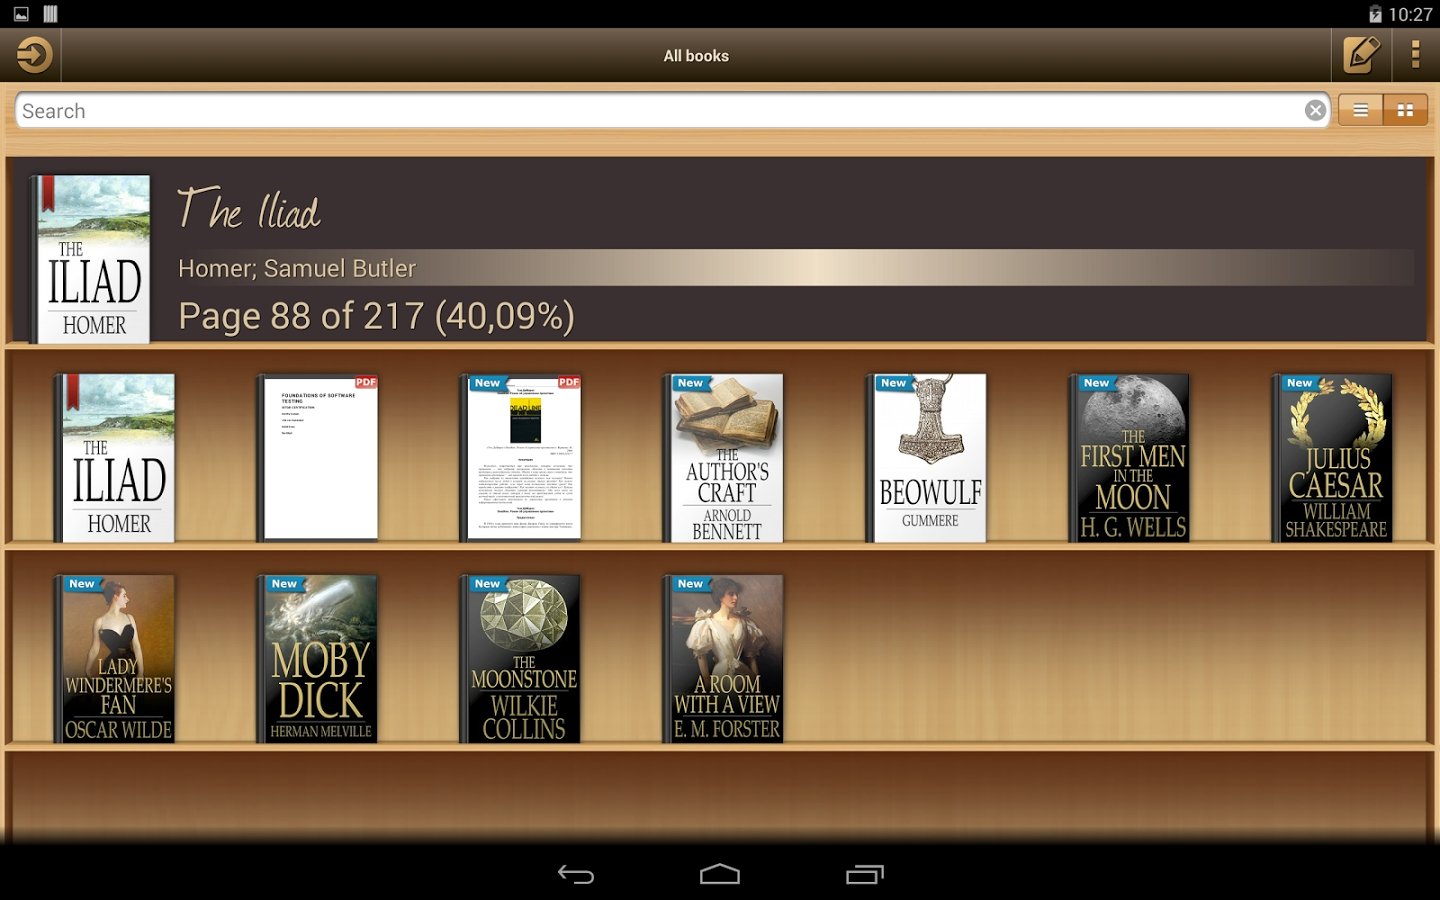 ebook reader free download for windows 10